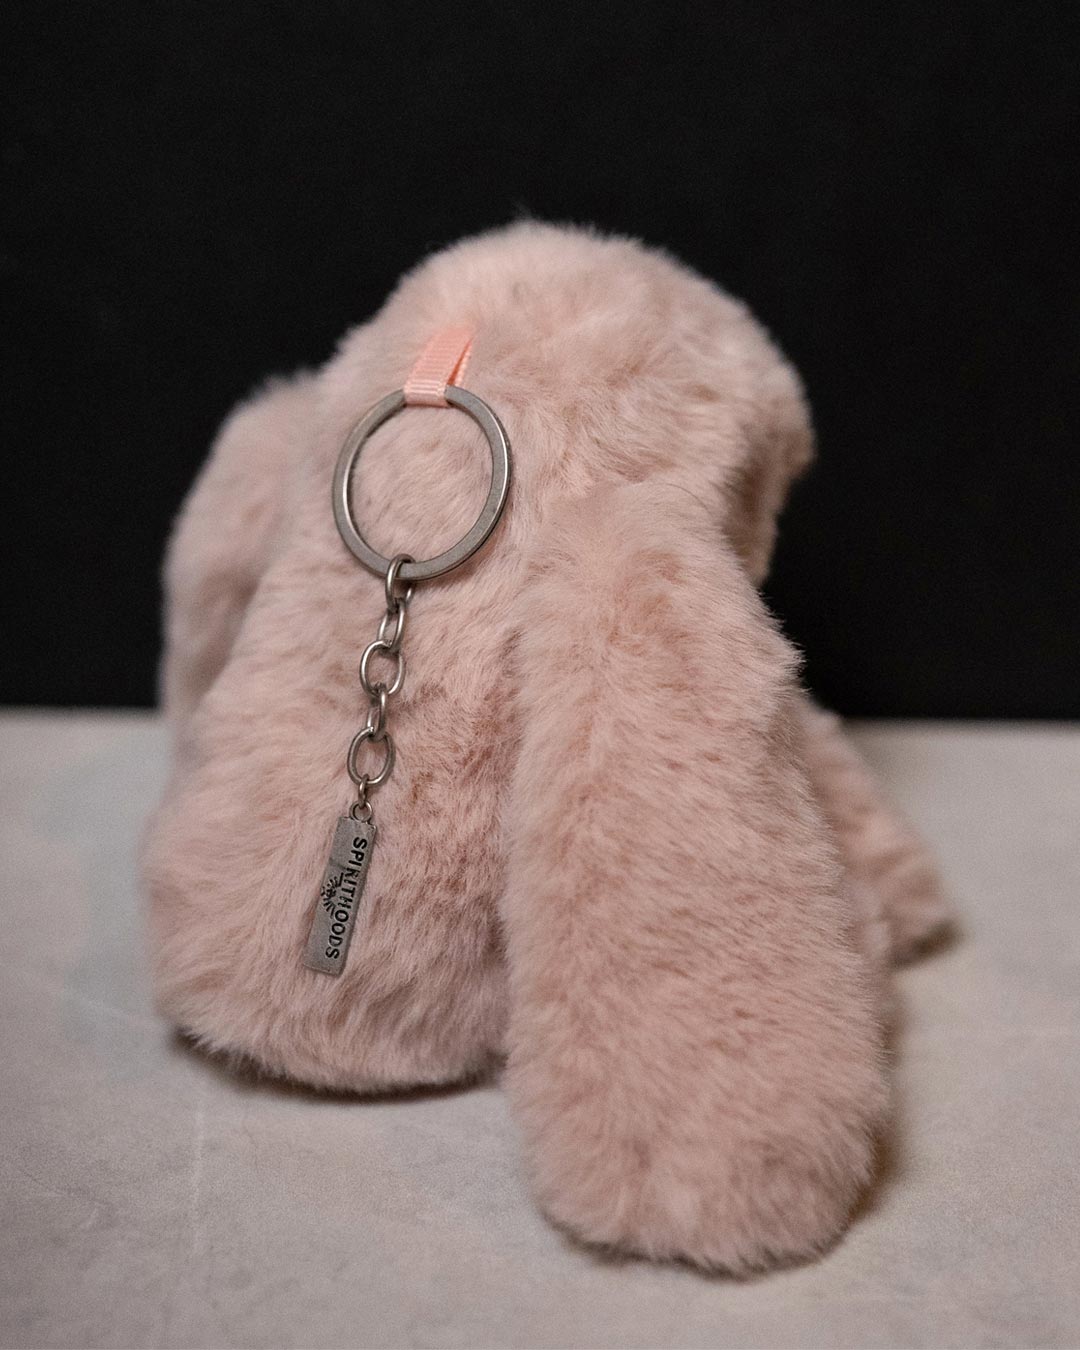 Bunny Keychain Faux Plush, Faux Fur Bunny Keychain